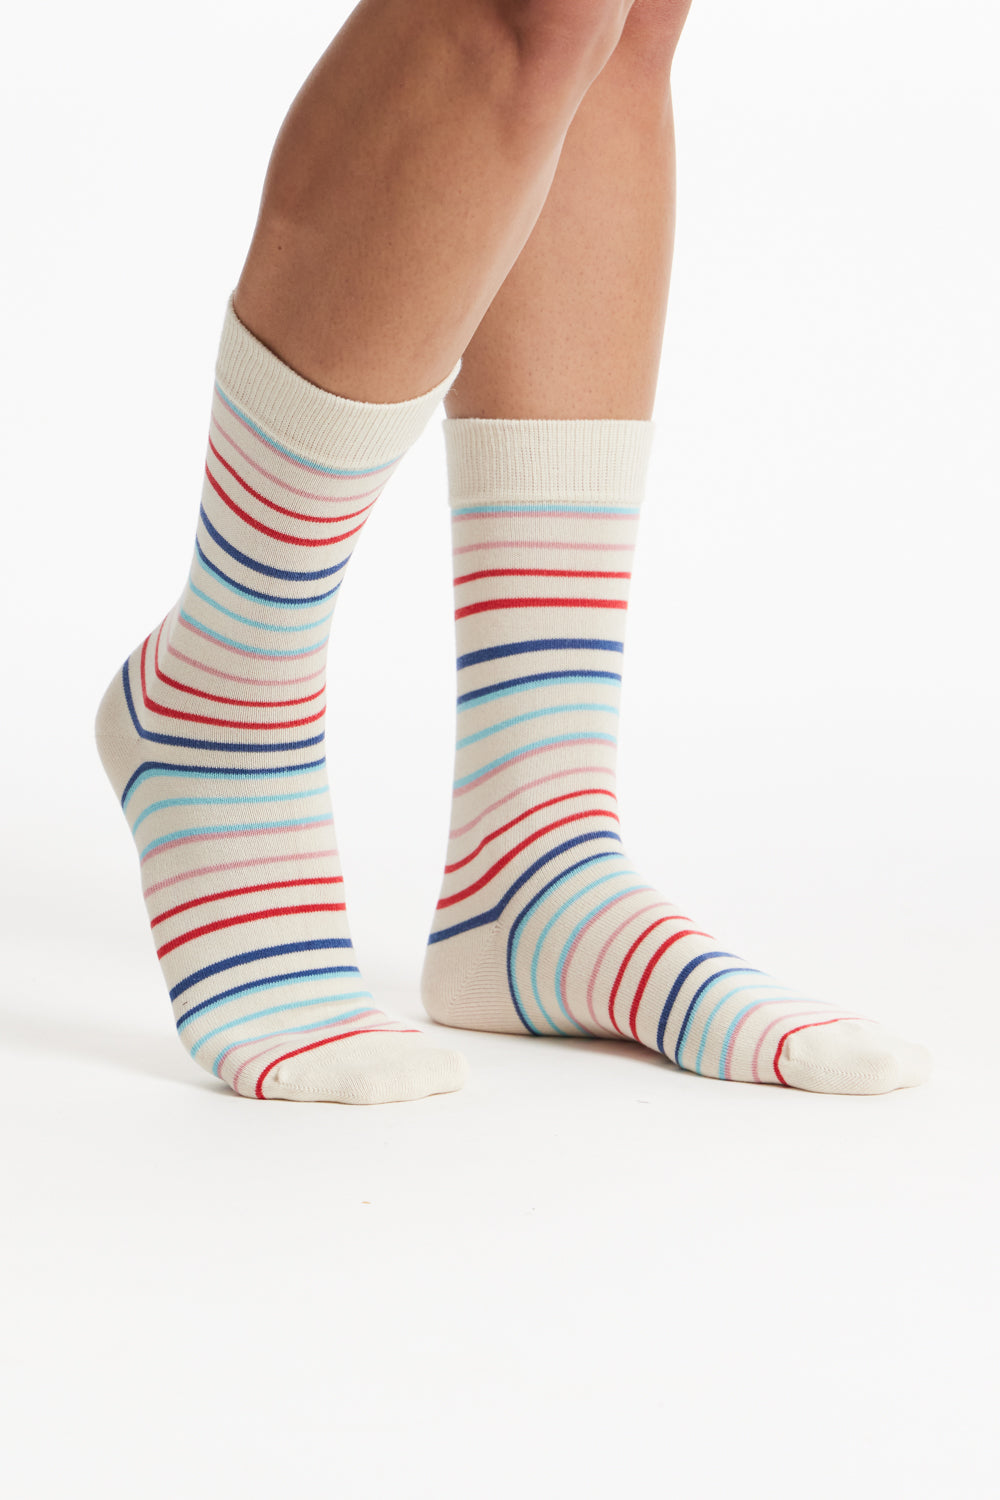 Organic Cotton Socks in Rainbow Stripe